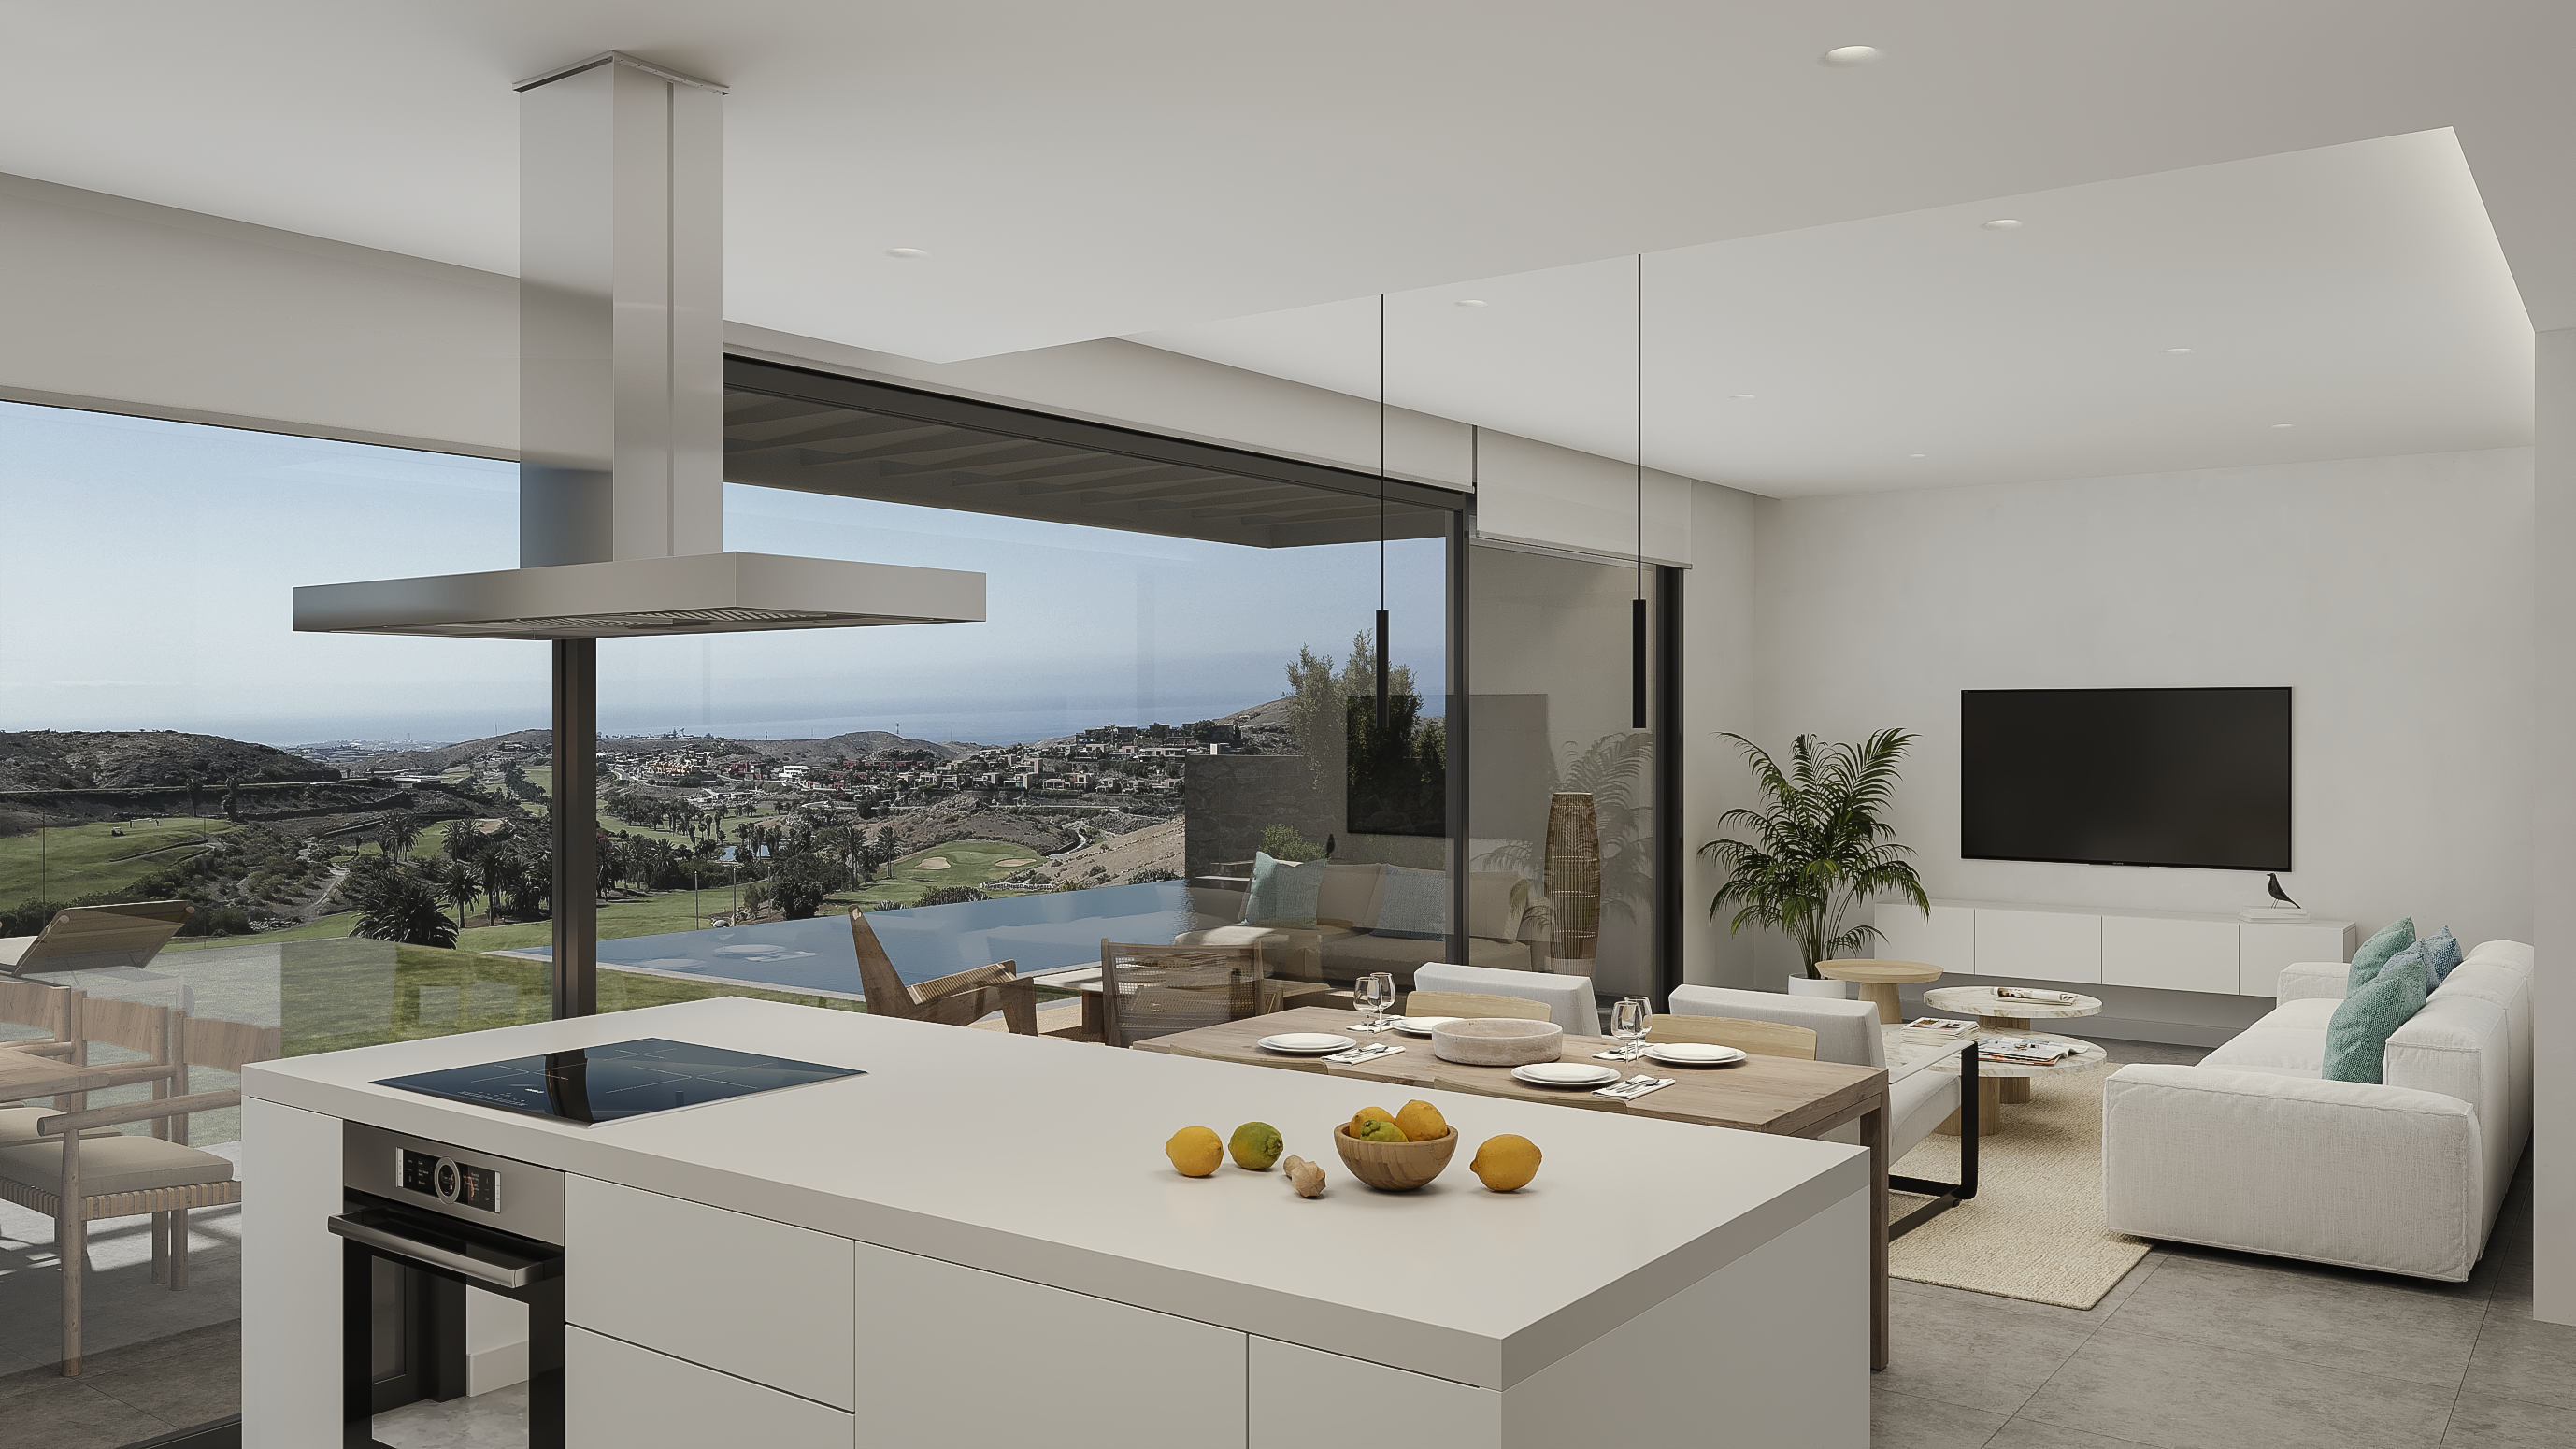 HOYO19 Luxury Golf Homes in Gran Canaria - Kitchen render (interiors)